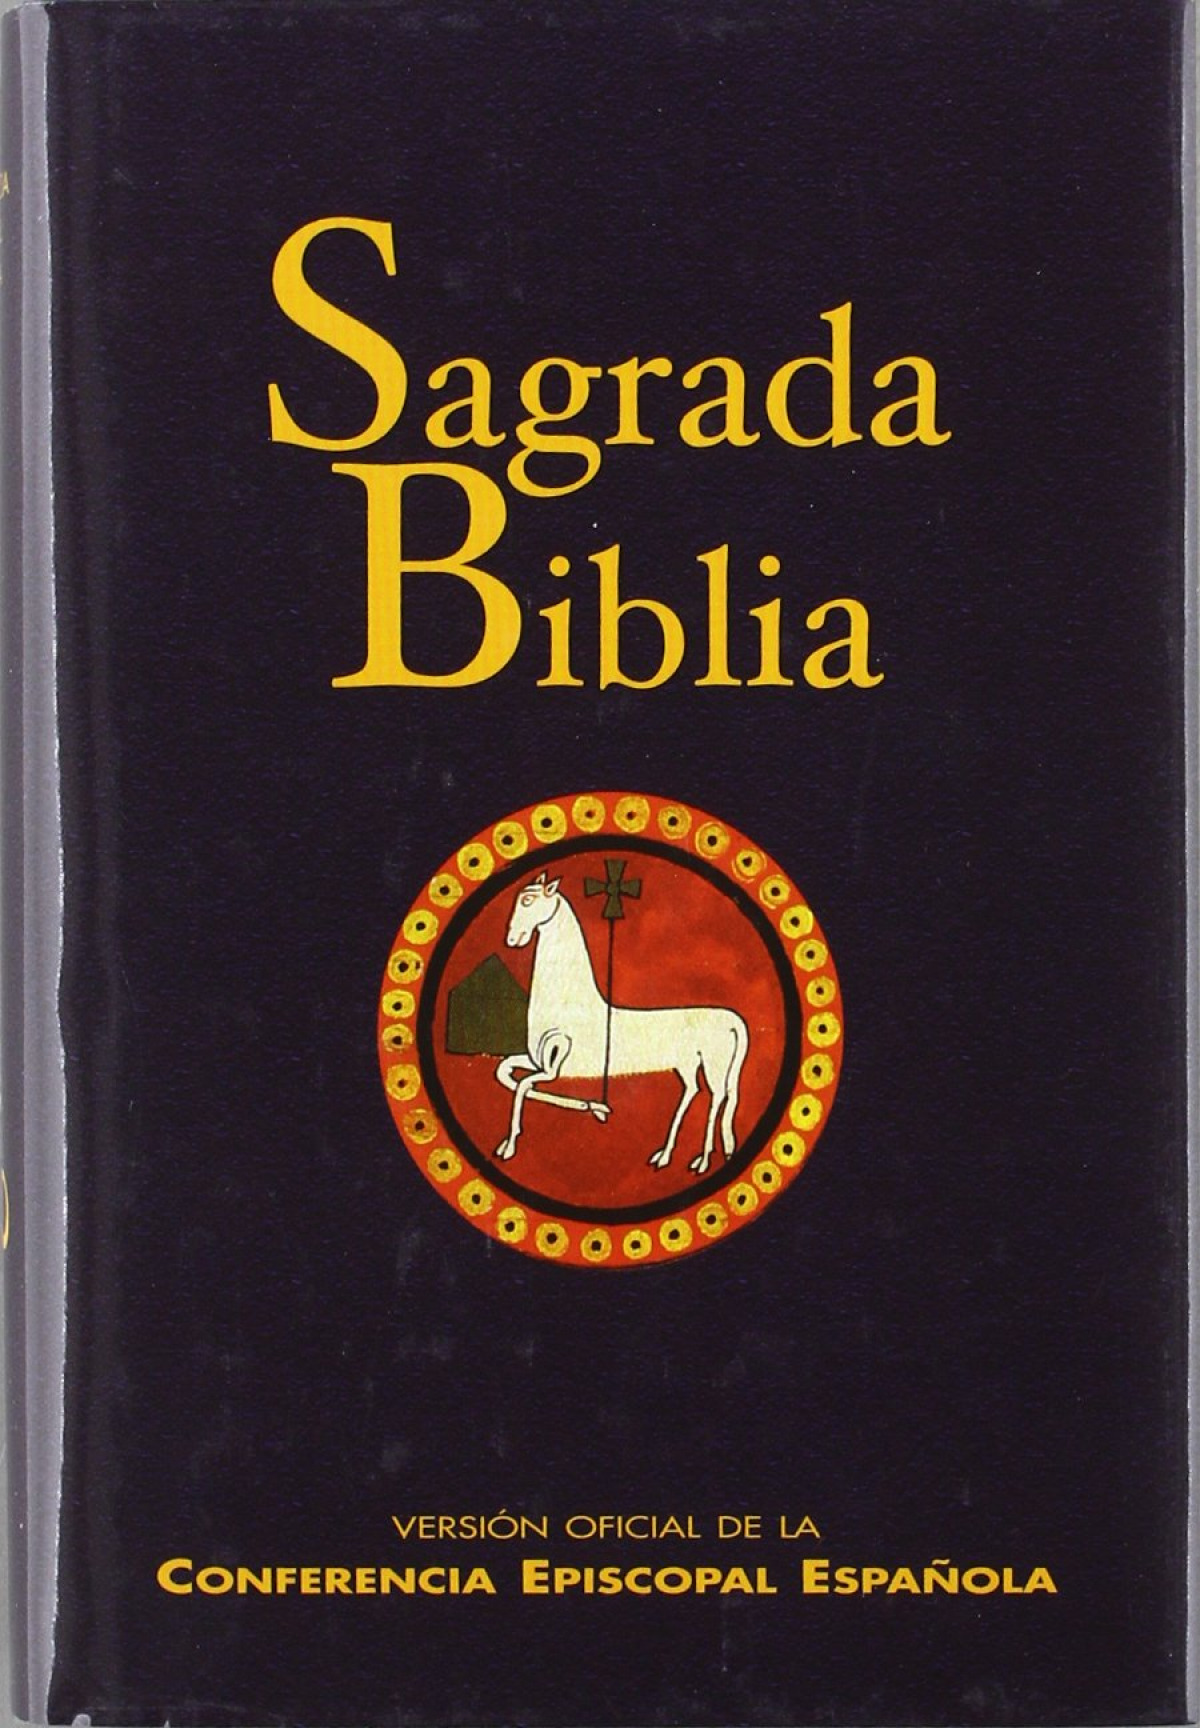 Sagrada biblia (12) - b.a.c. sagrada biblia (12) - b.a.c.